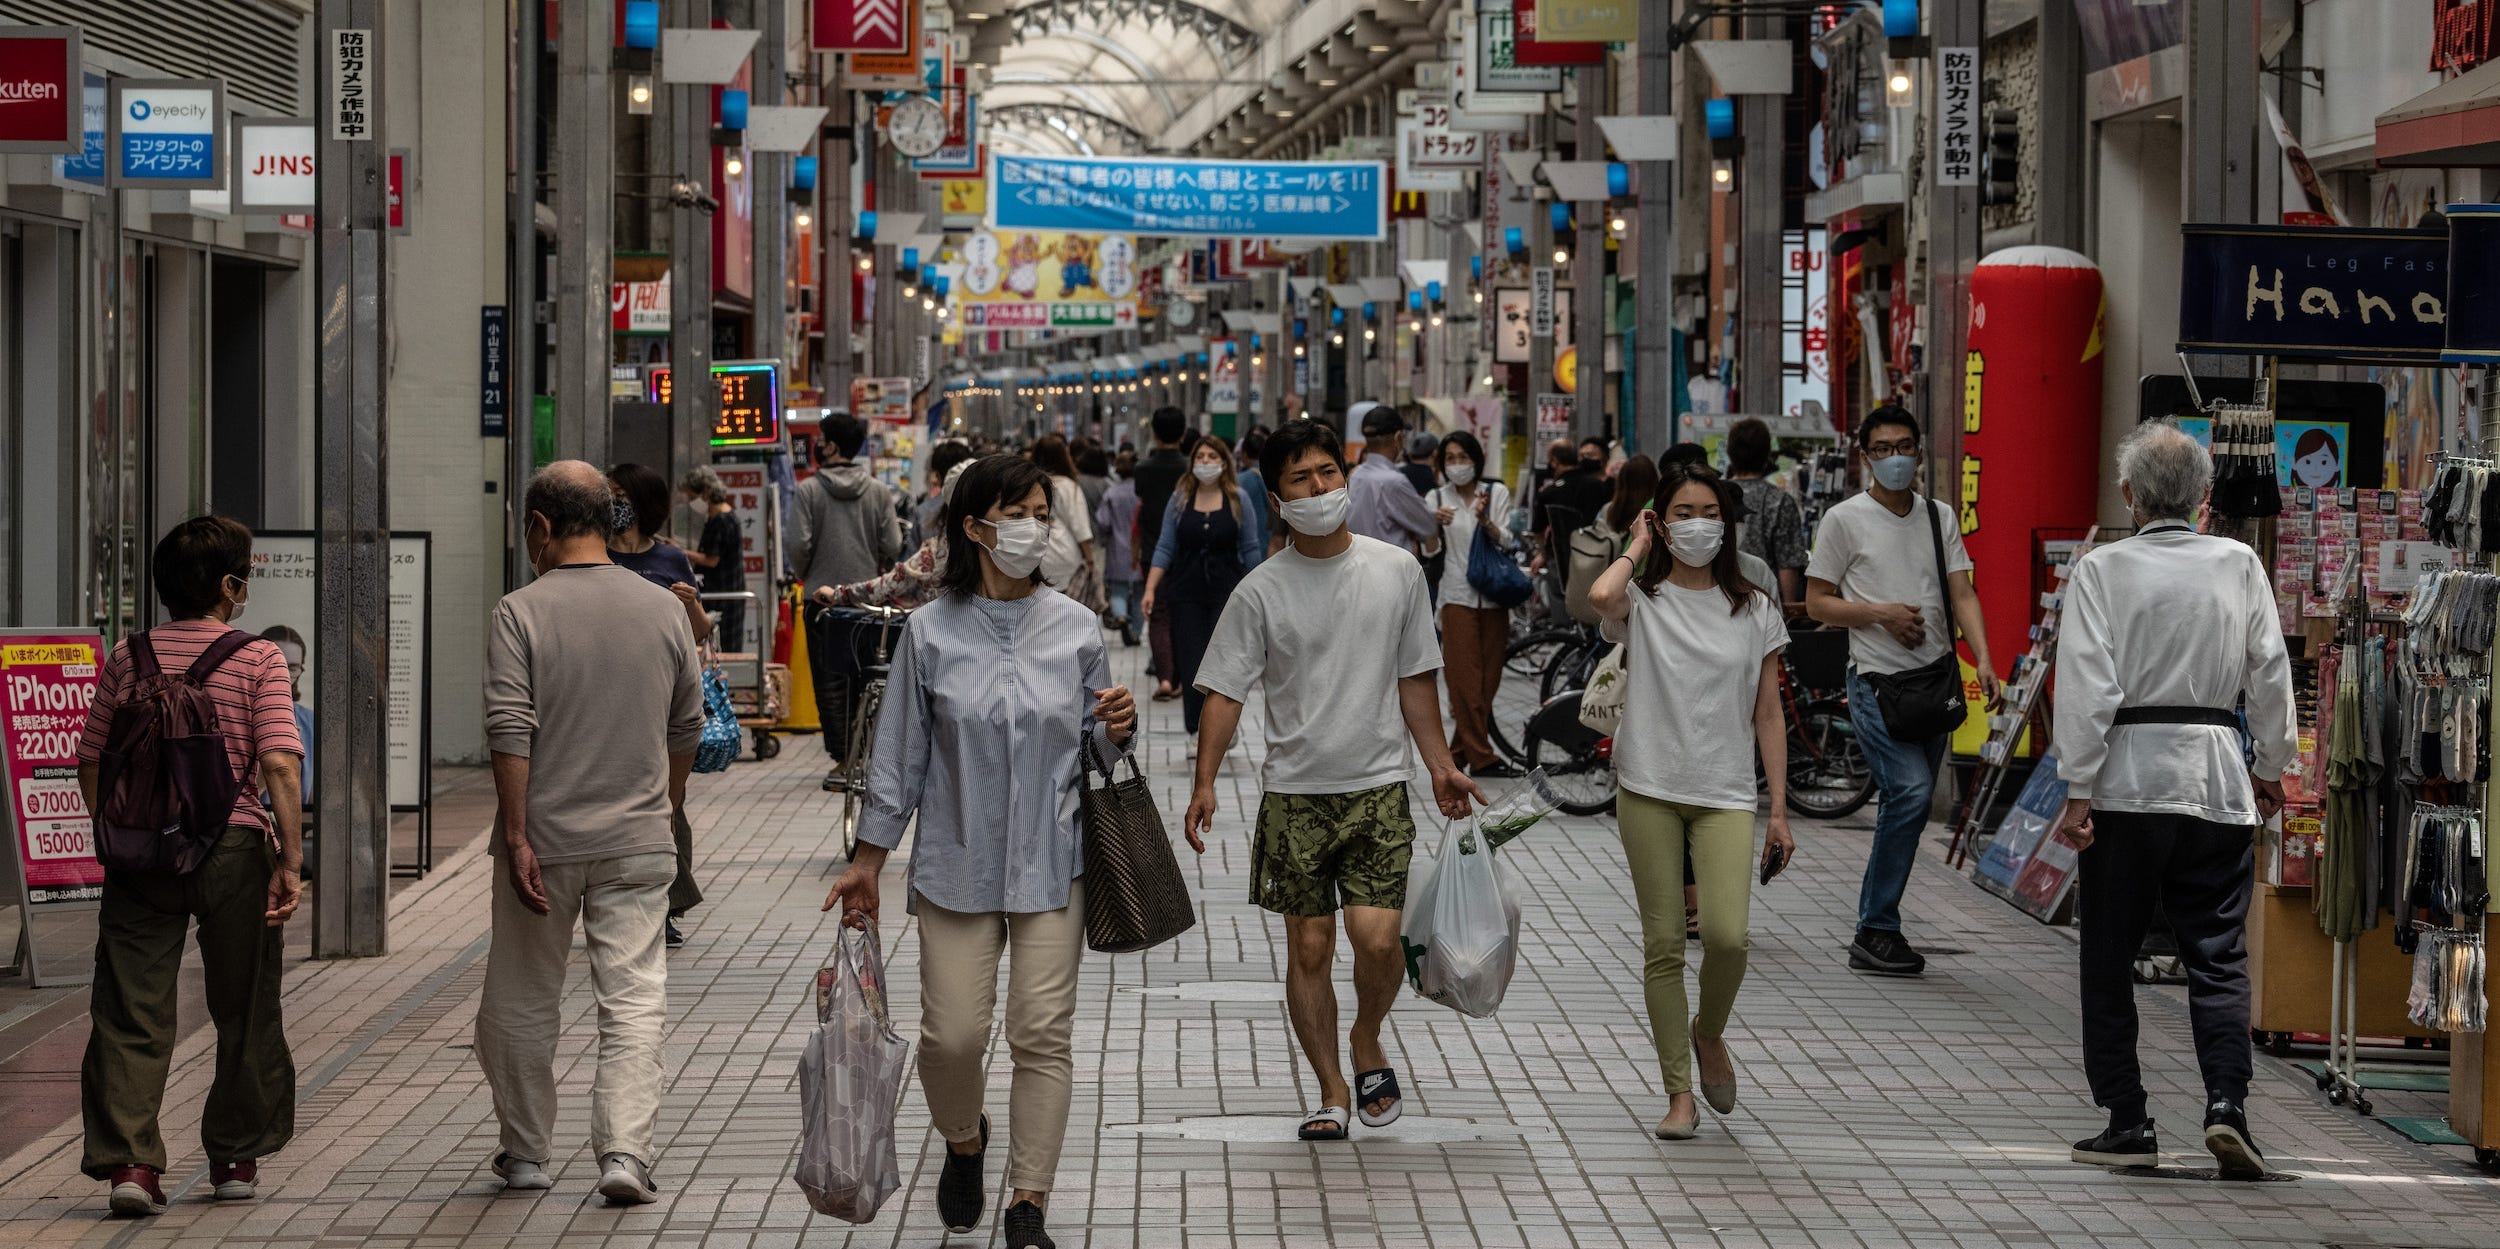 Japan shopping street coronavirus